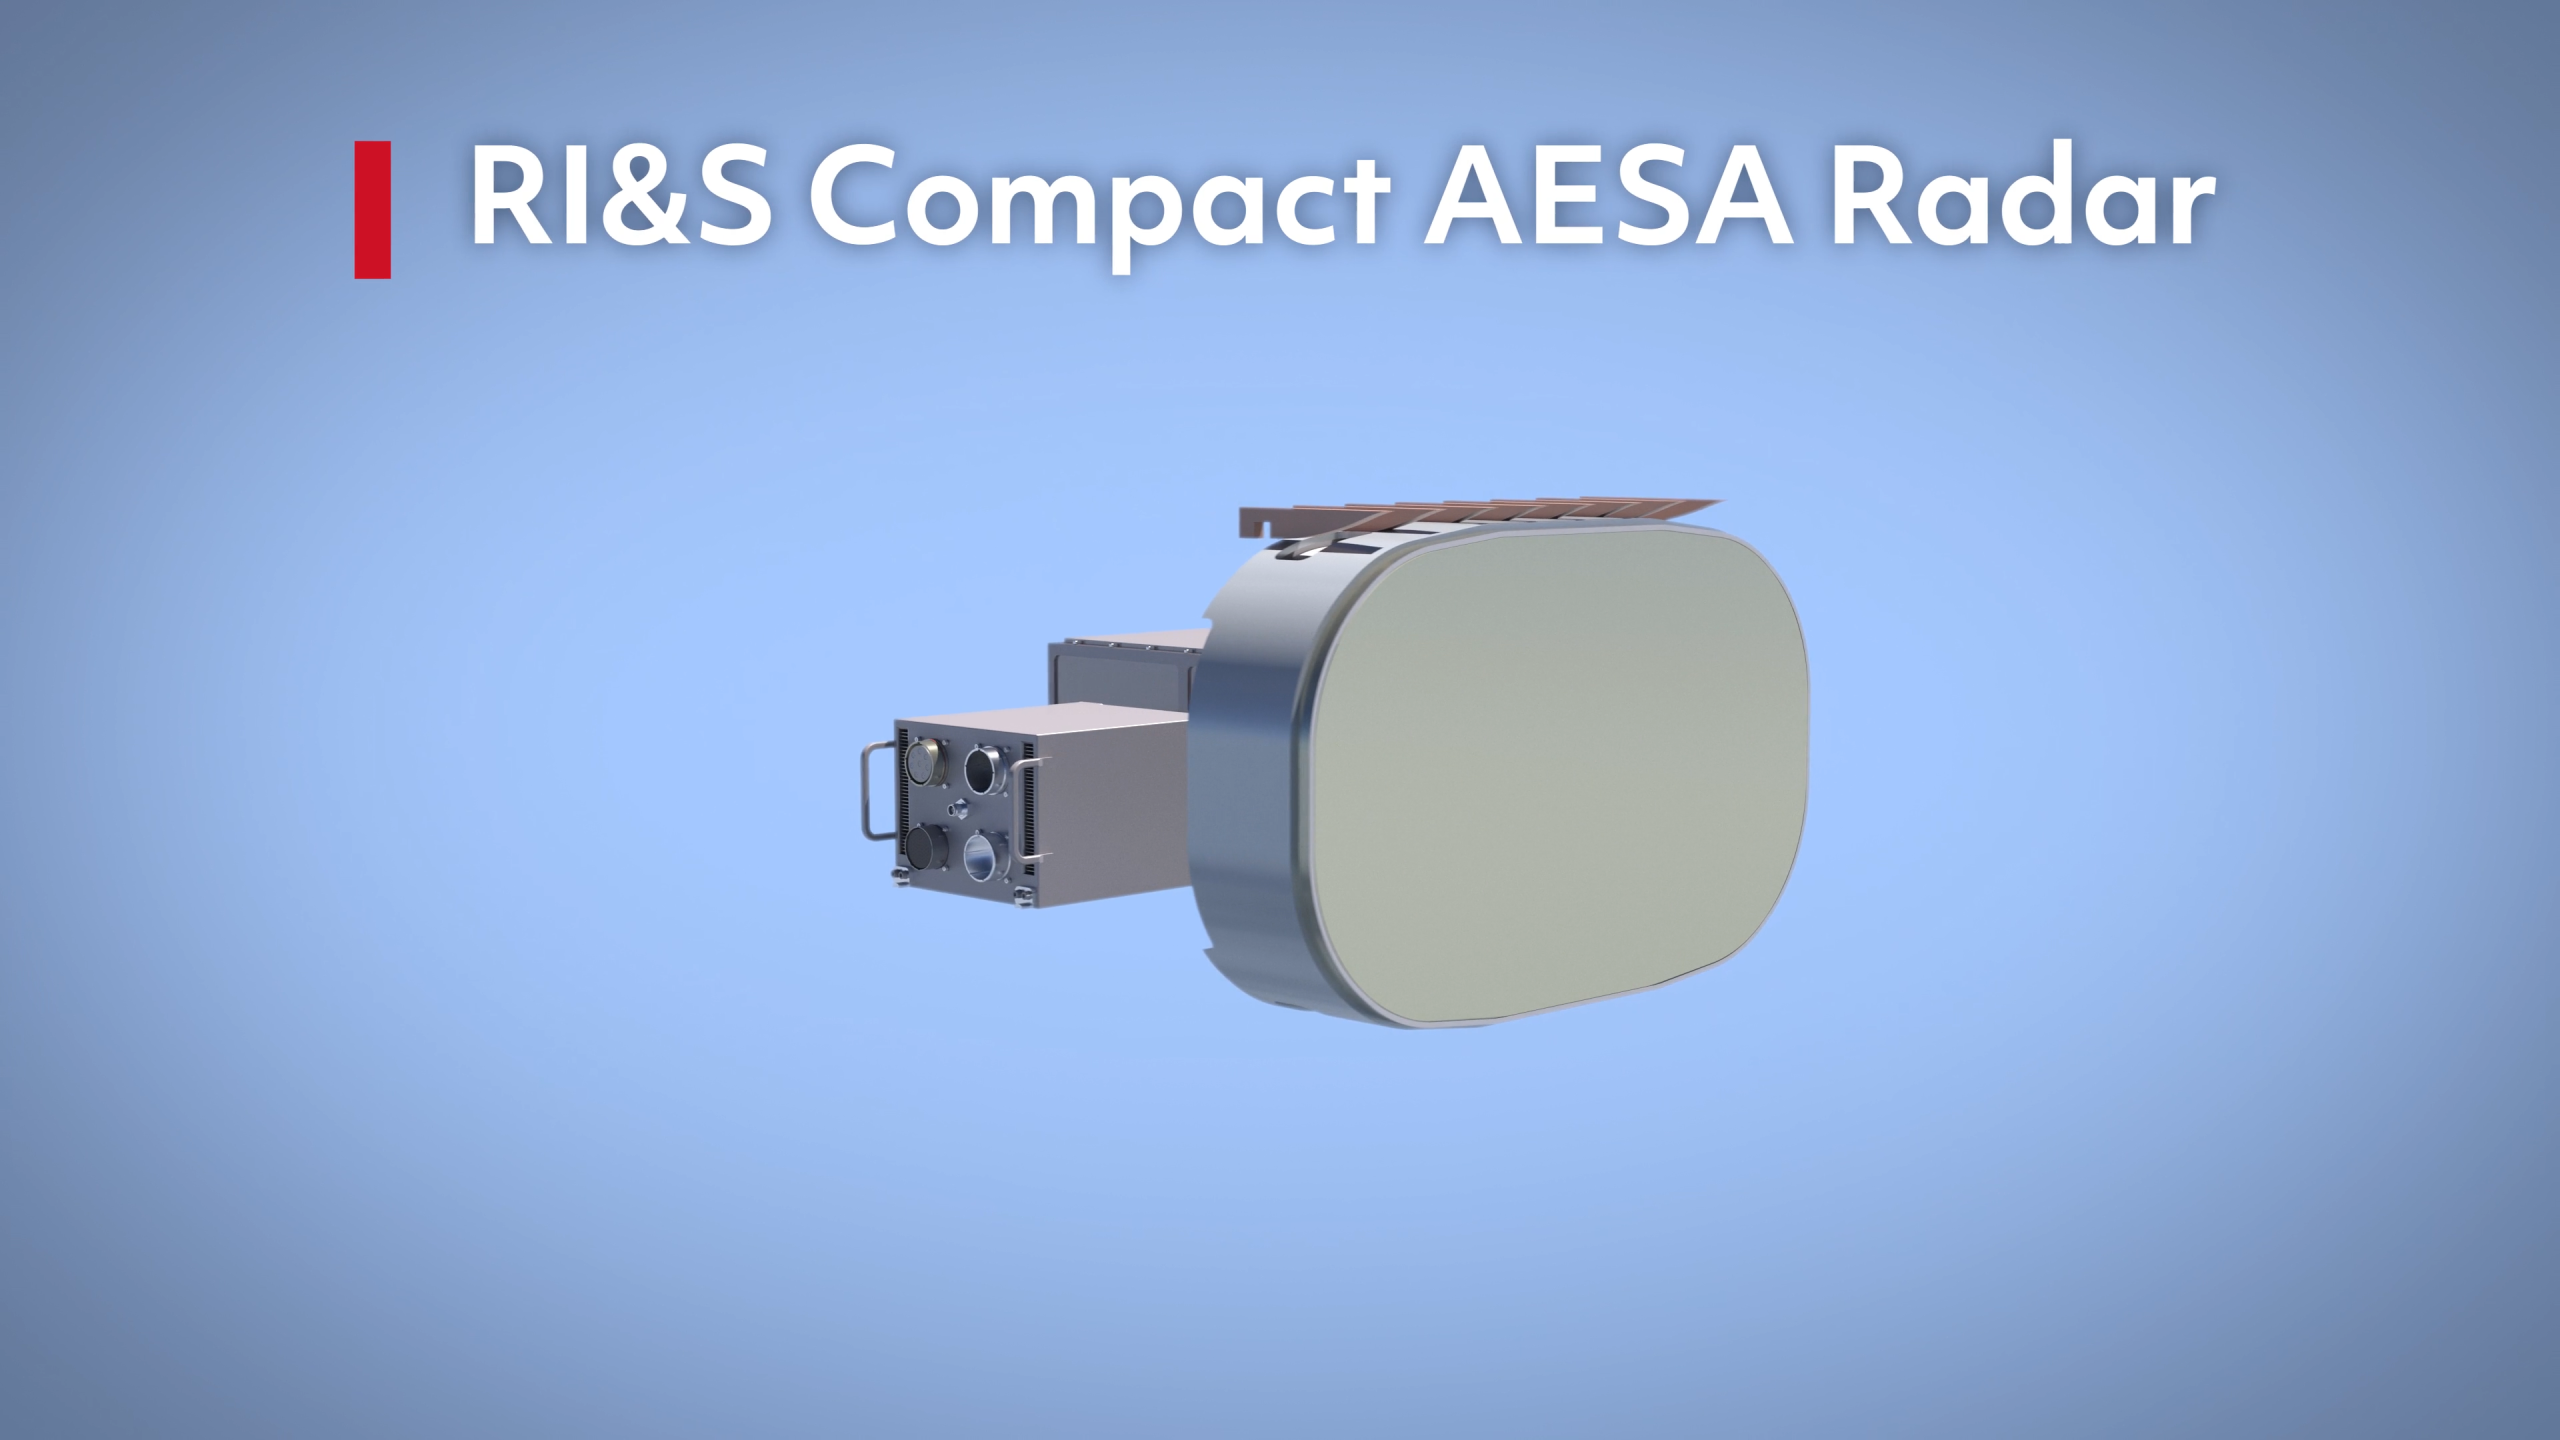 Active Electronically Scanned Array (AESA) radar